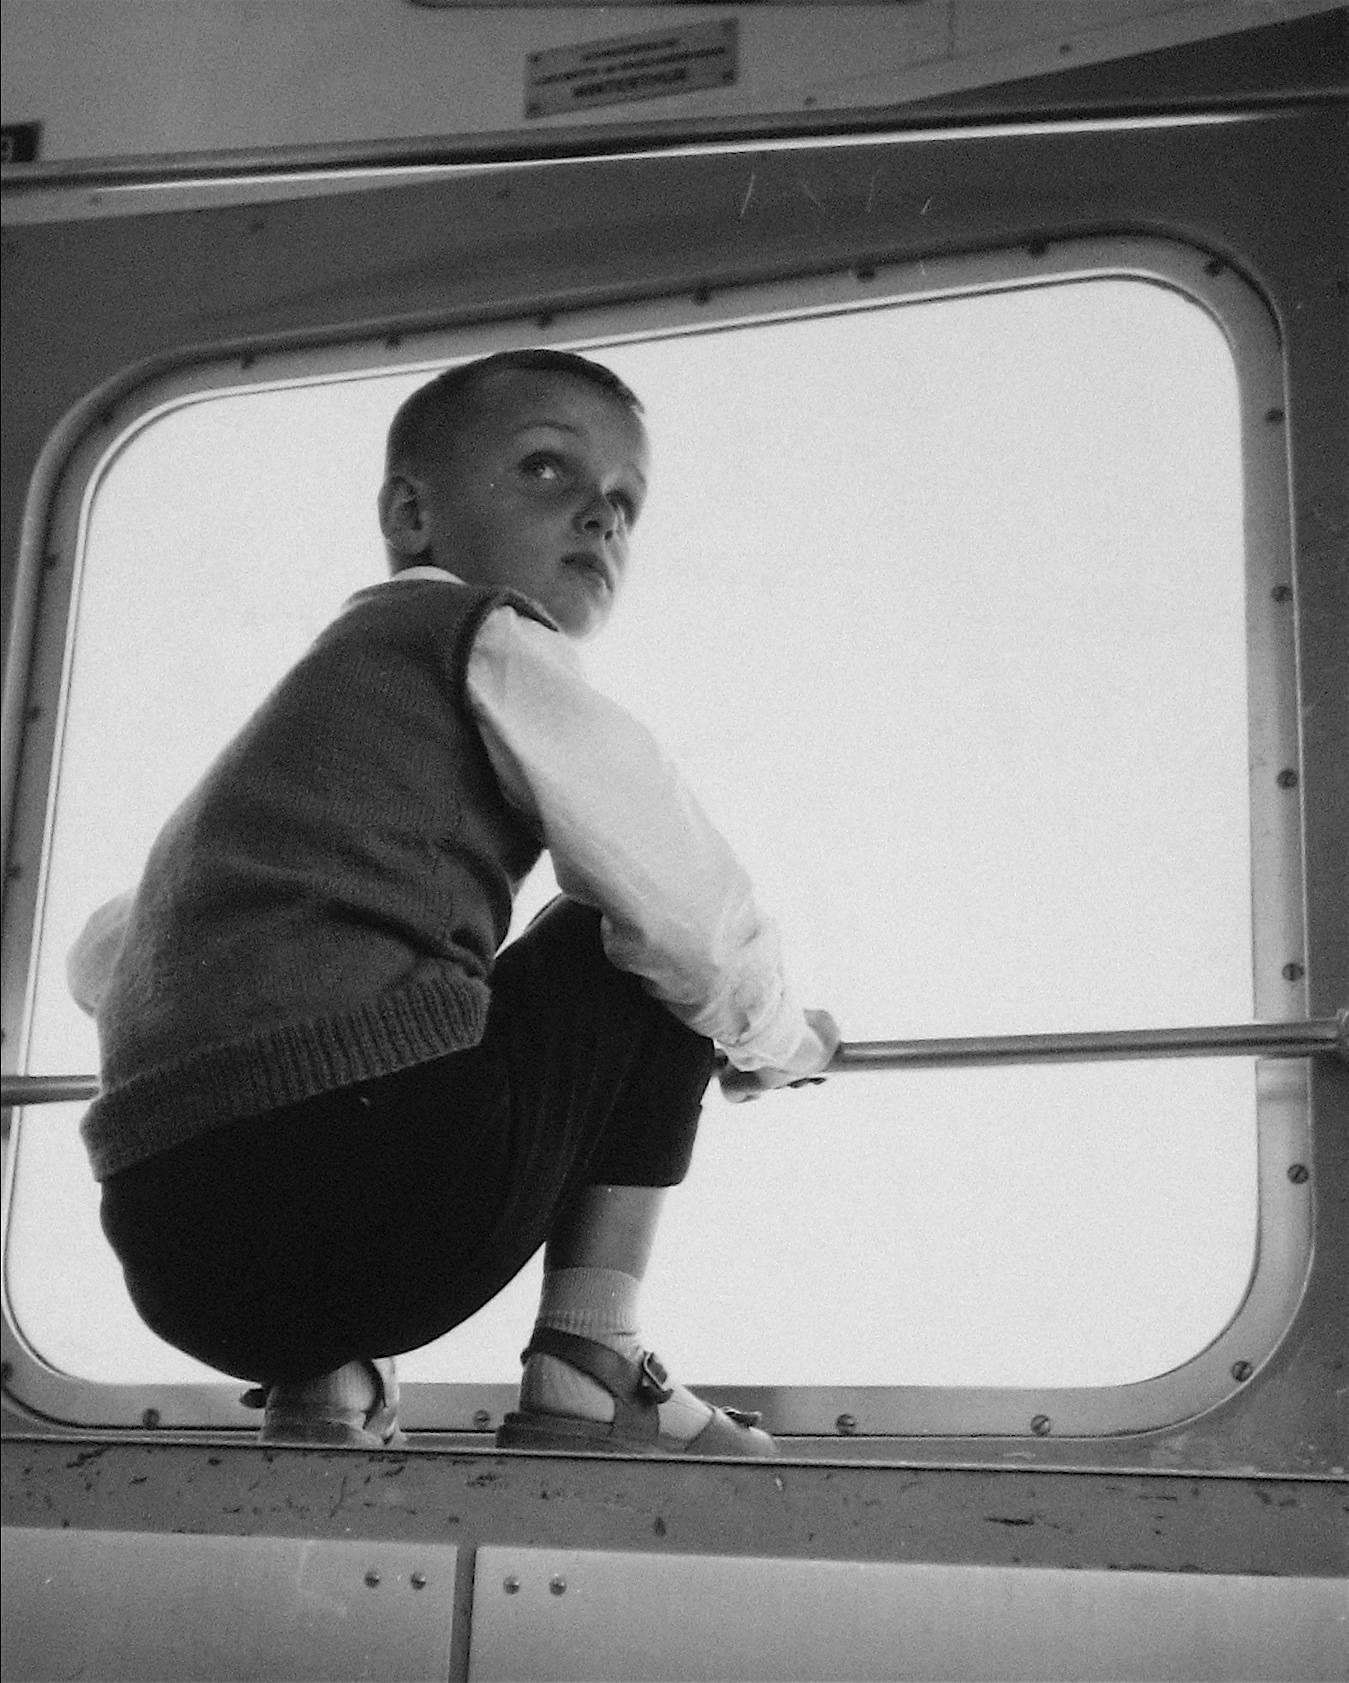 Roz Joseph Black and White Photograph - Boy on a Swiss Train, Photograph, 1960s